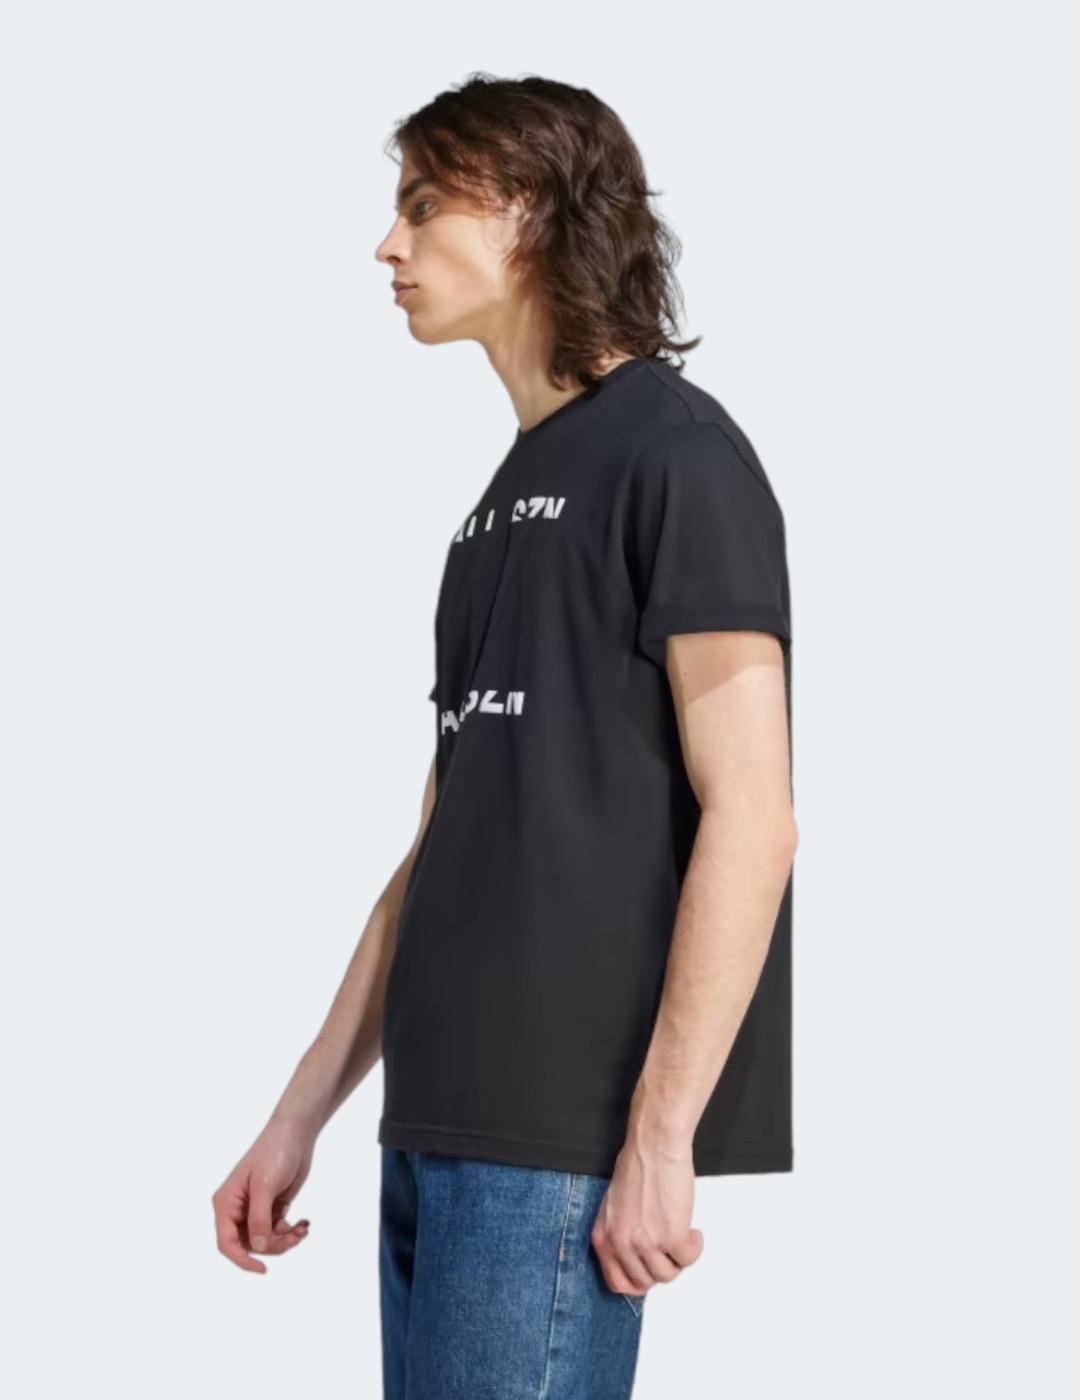 Camiseta Adidas ALL SZN negra para hombre